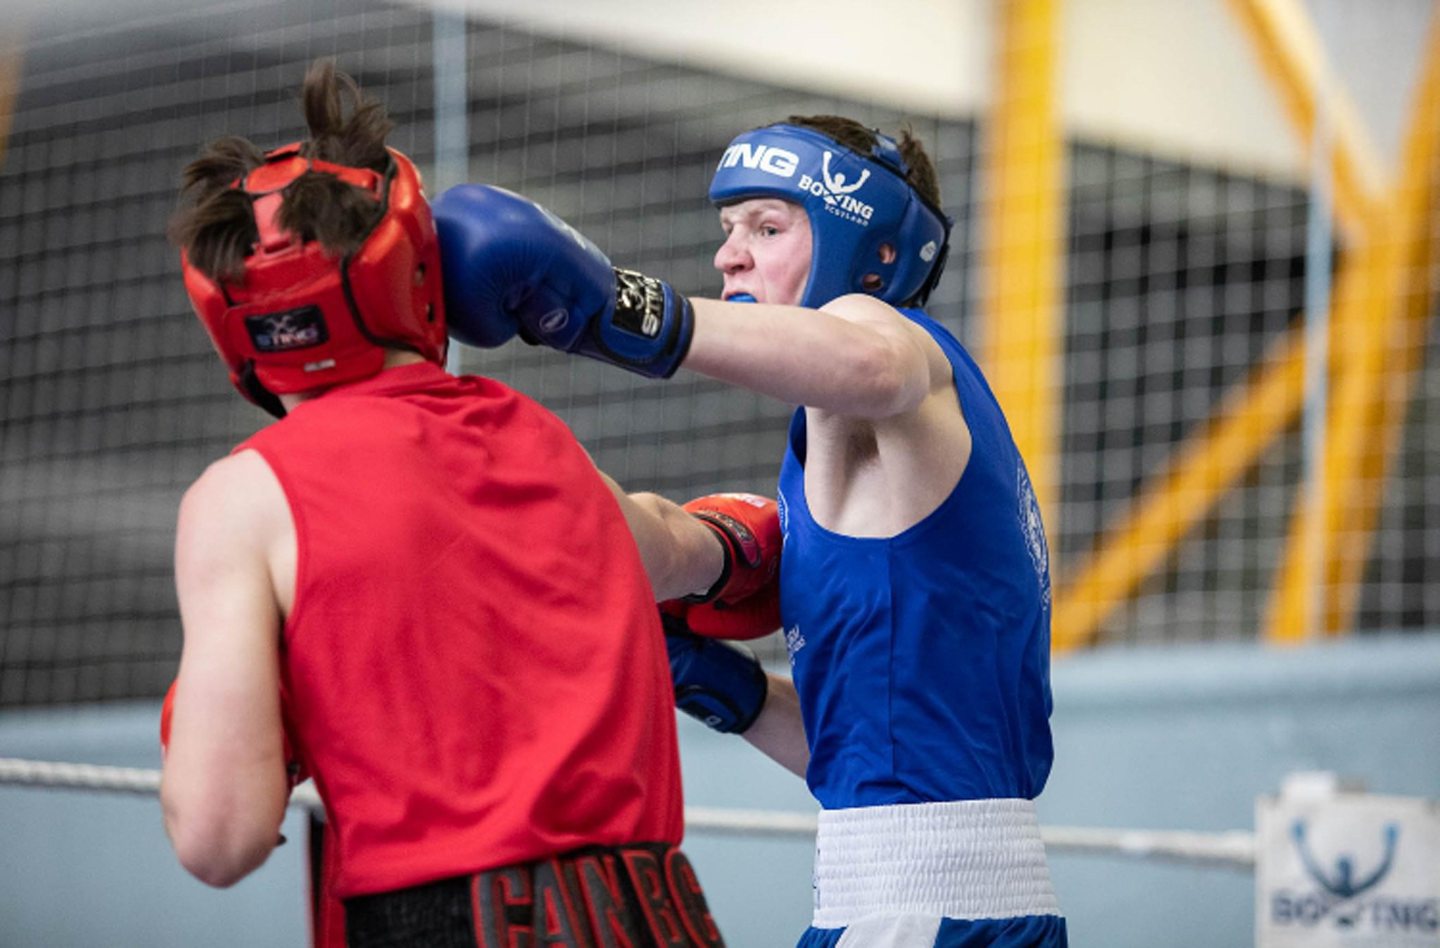 Granite City ABC boxer Ben Bonner lands a punch in the Golden Gloves final. Image: Boxing Scotland 